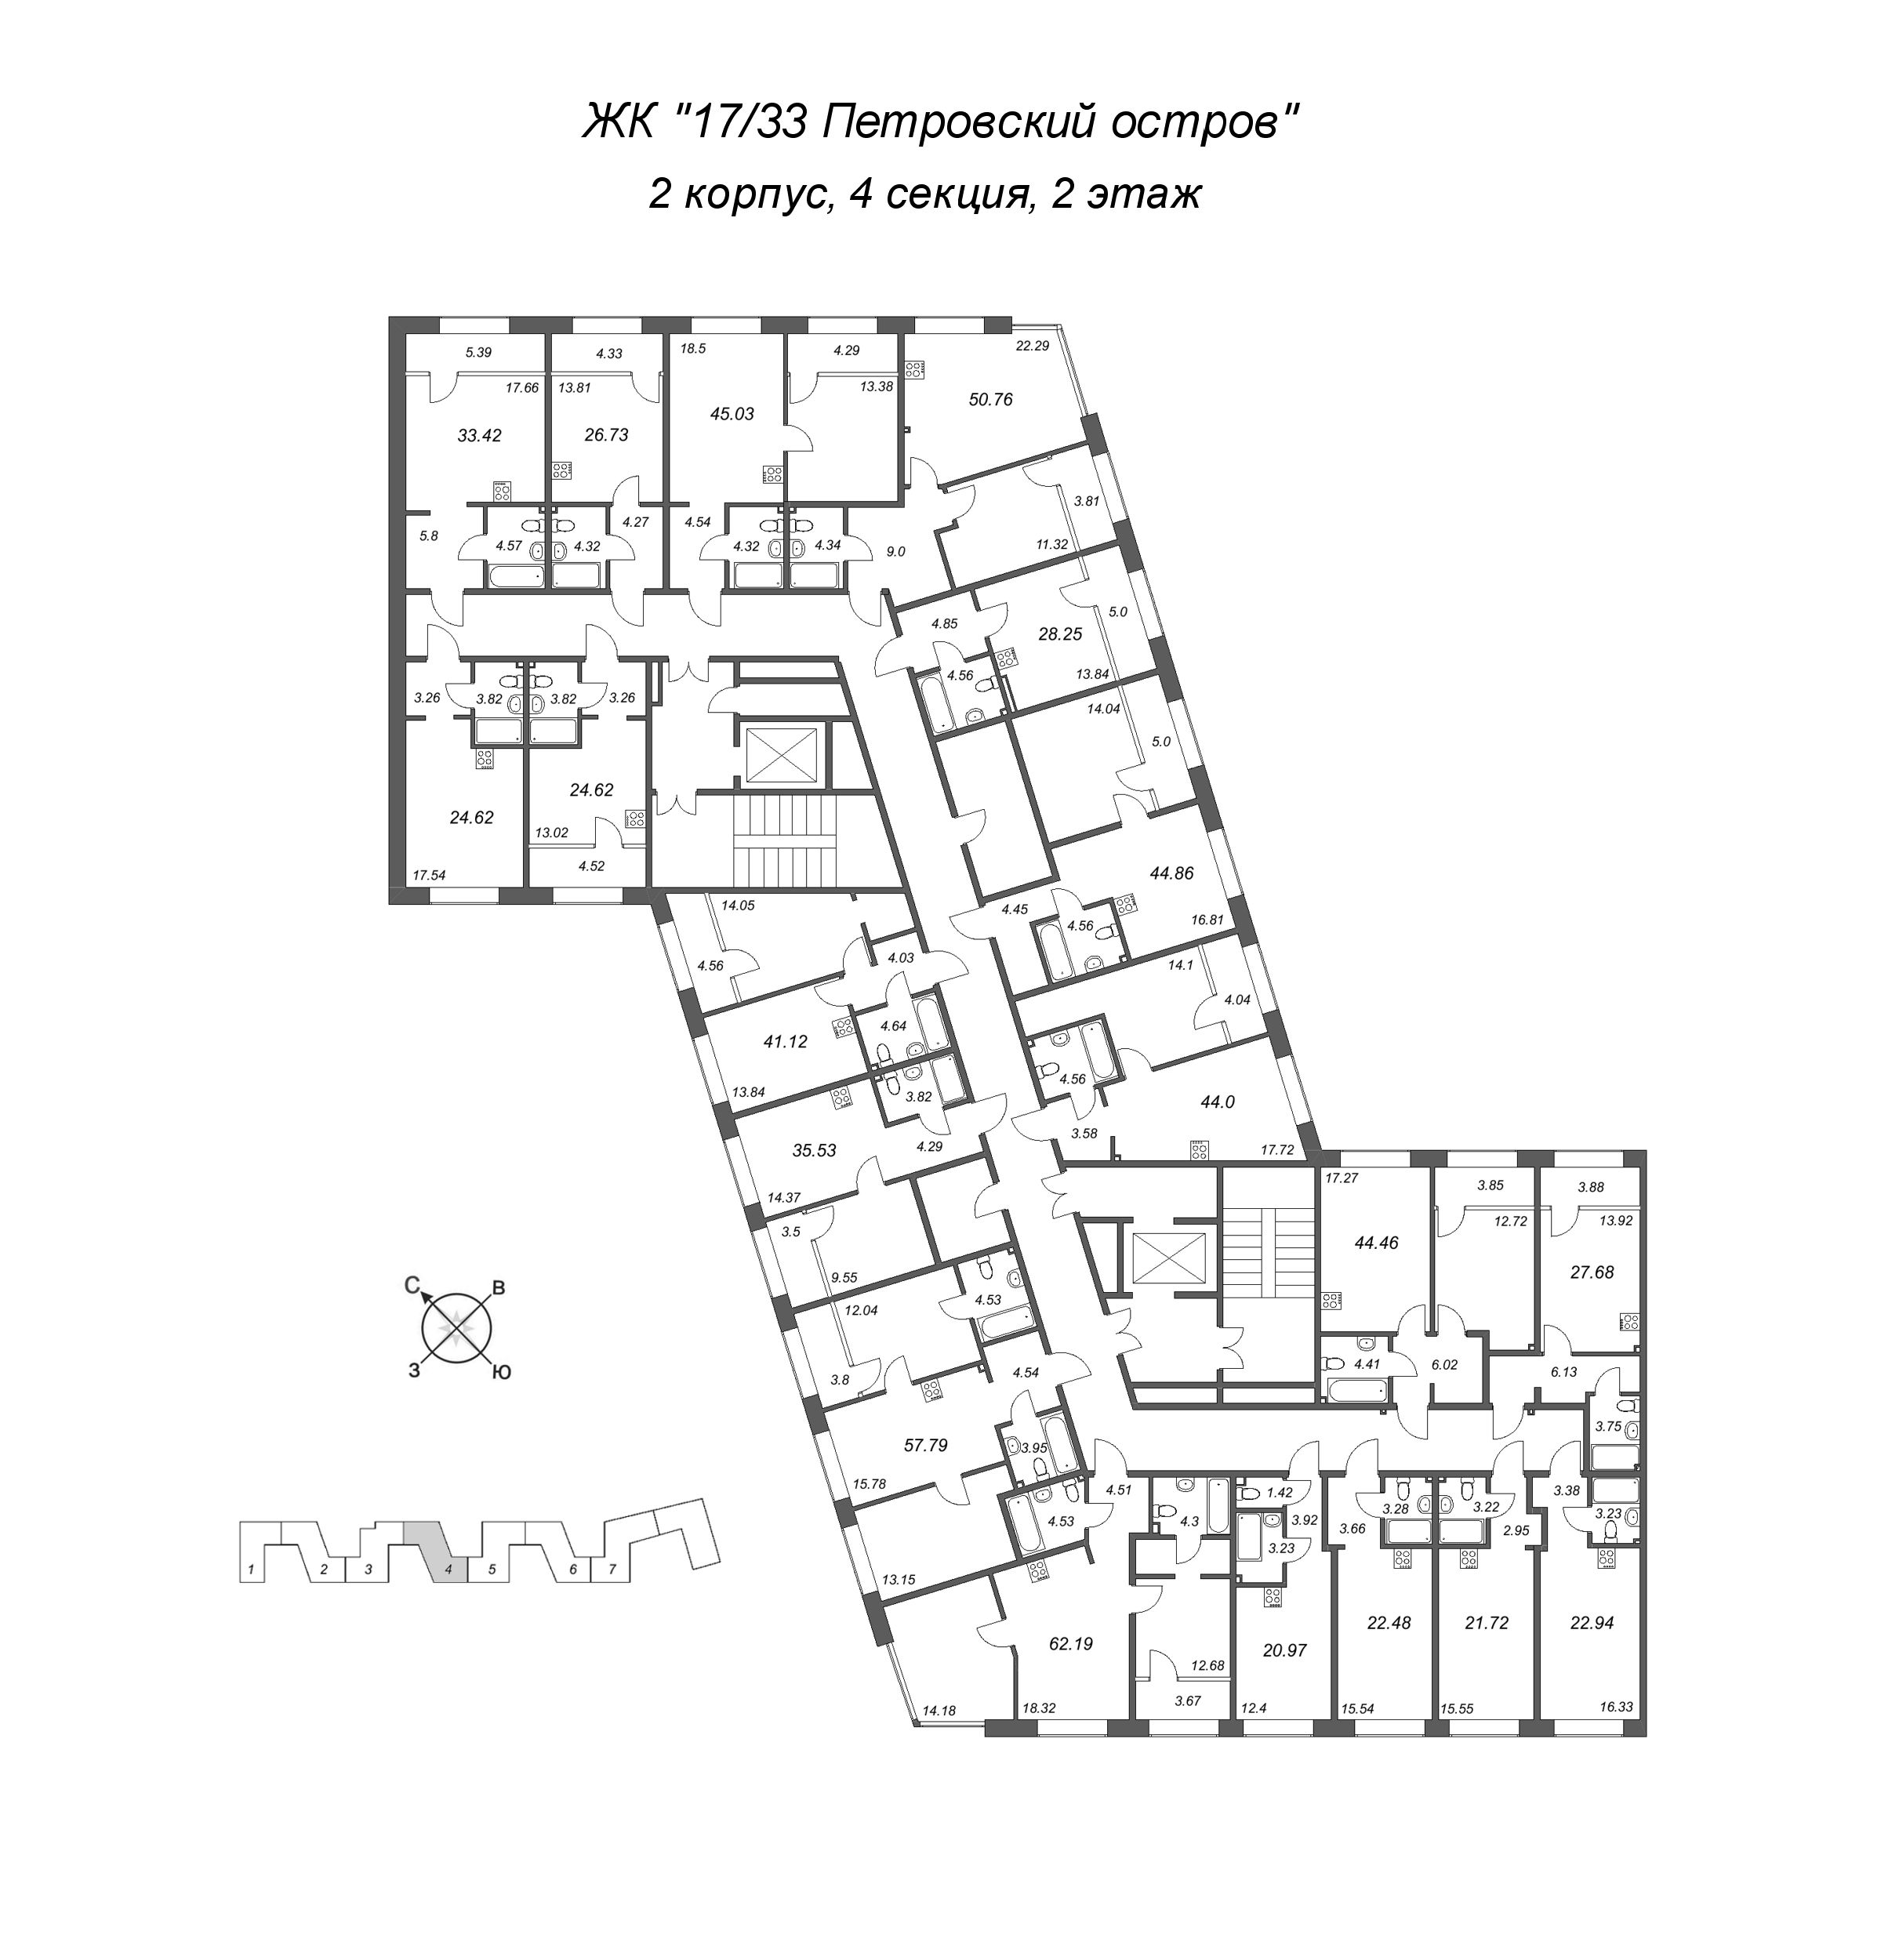 2-комнатная (Евро) квартира, 44.86 м² - планировка этажа